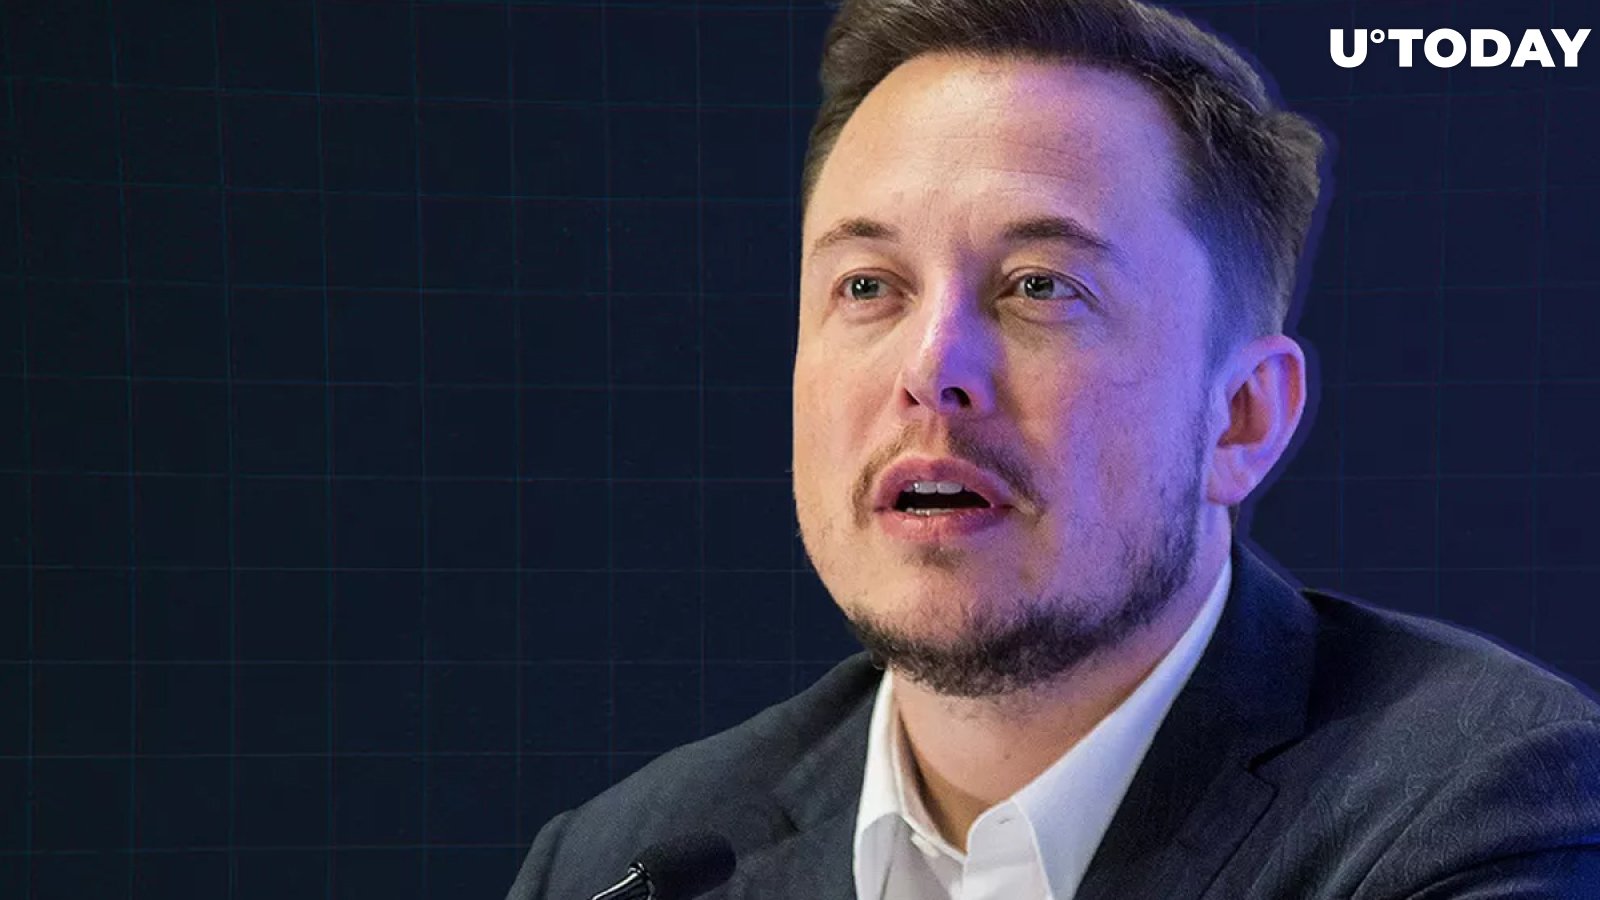 Dogecoin Fan Elon Musk May Buy Twitter This Week: Report